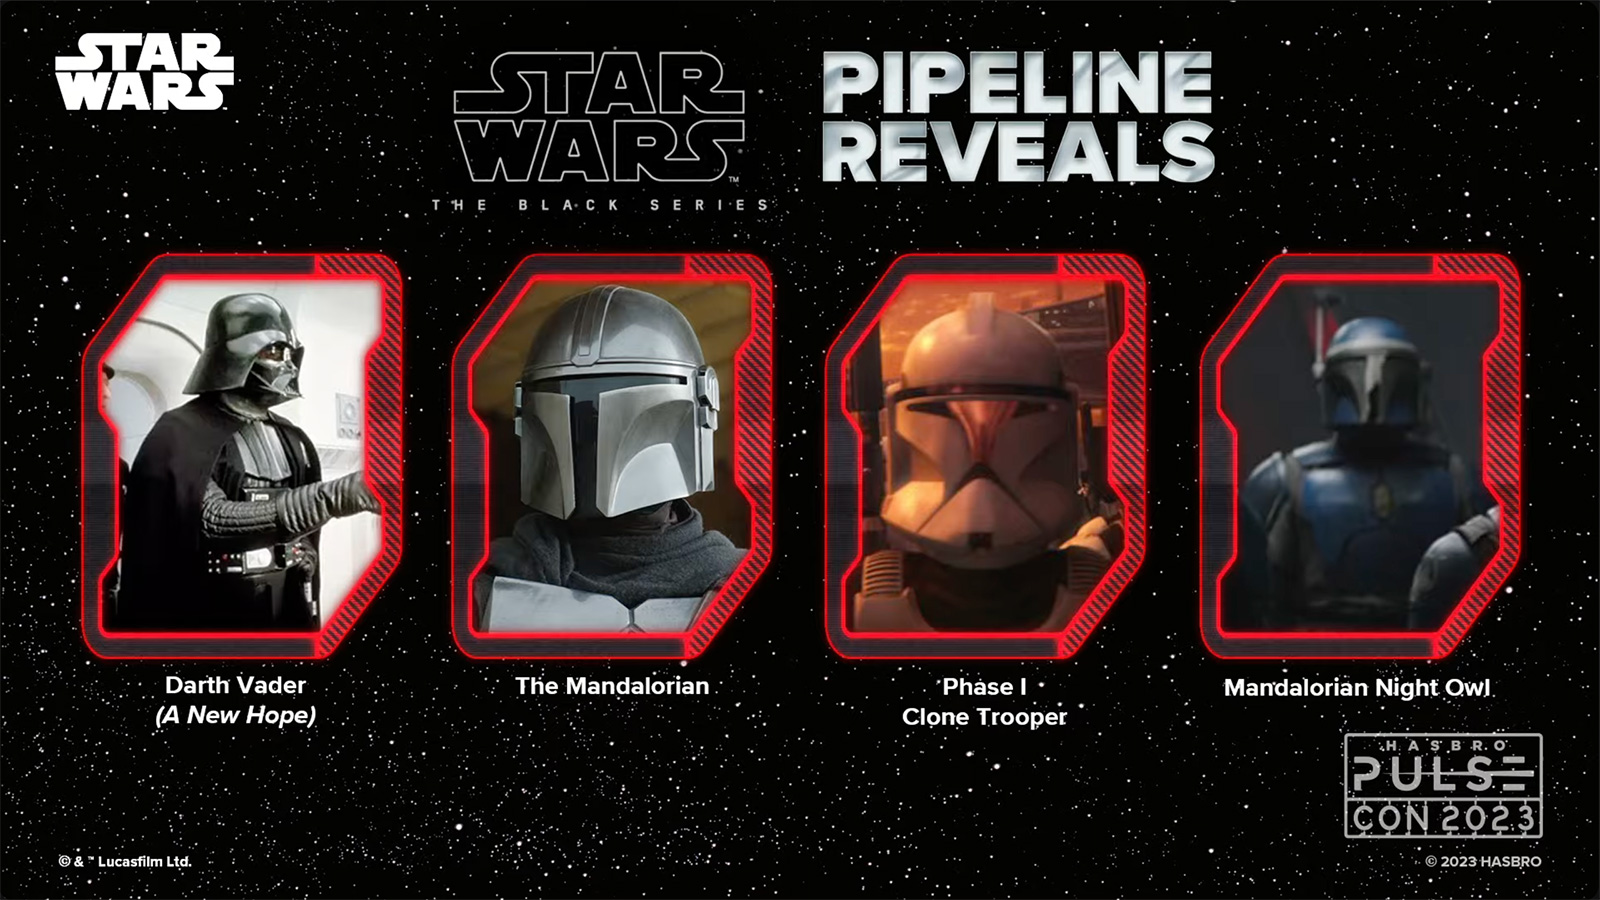 Hasbro Pulse Con 2023 Star Wars The Black Series Pipeline Reveals